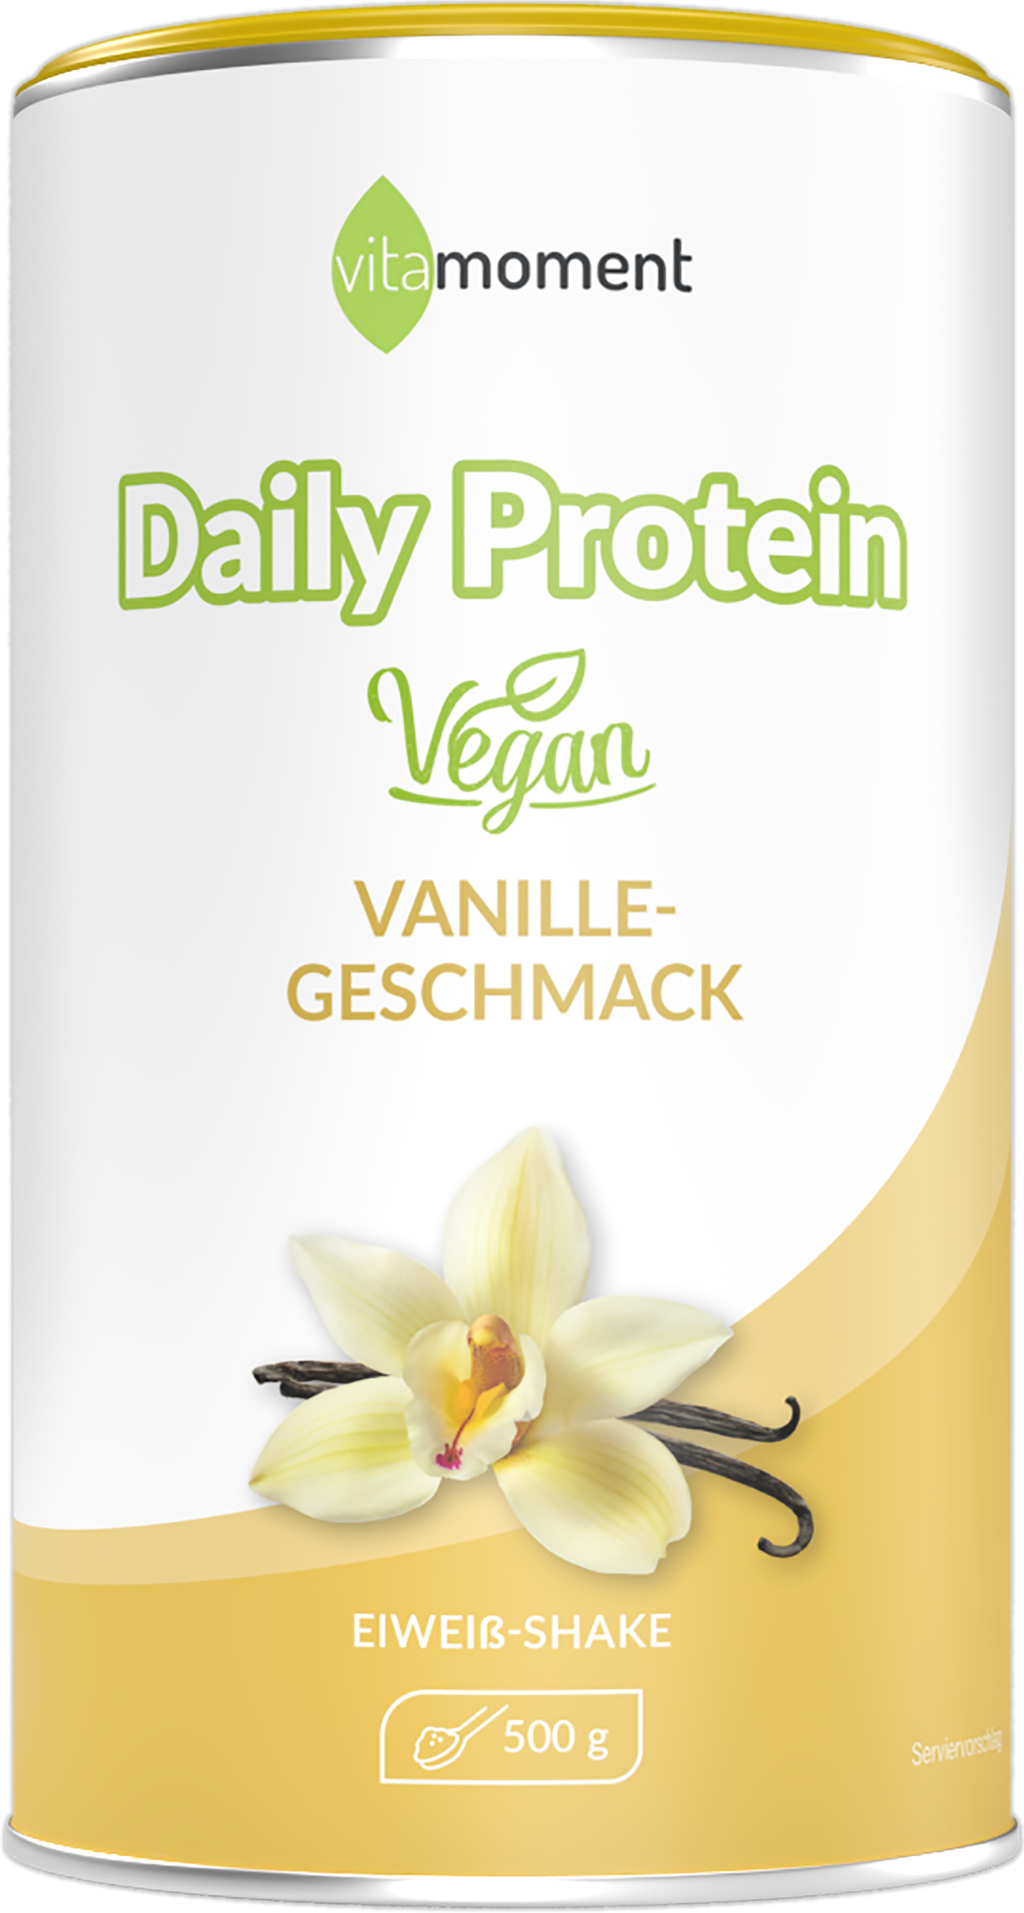 Daily Protein Shake Vegan - Vanille, 500g - VitaMoment Produkt